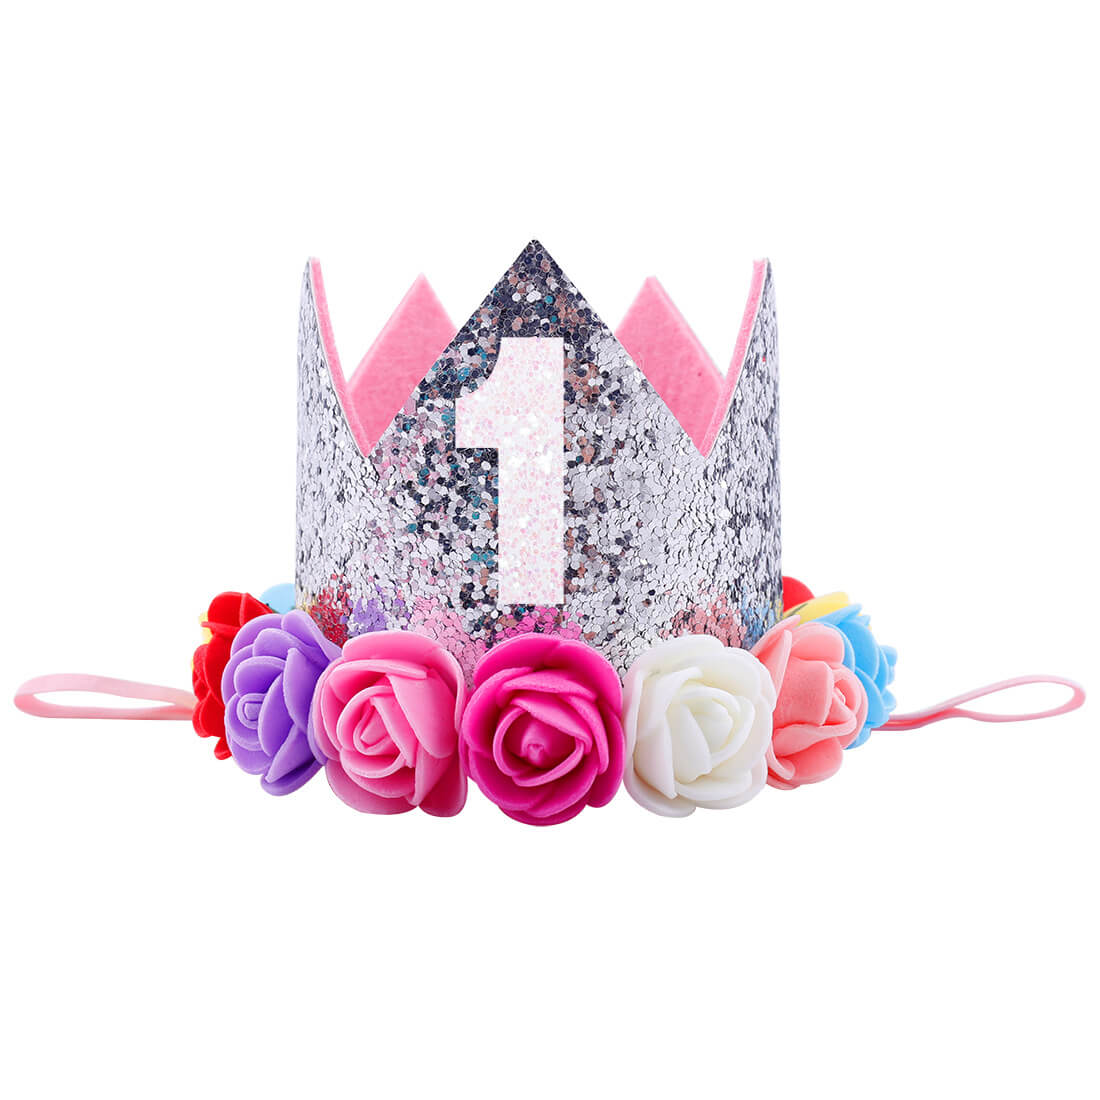 Baby Girl First Birthday Crown Headband